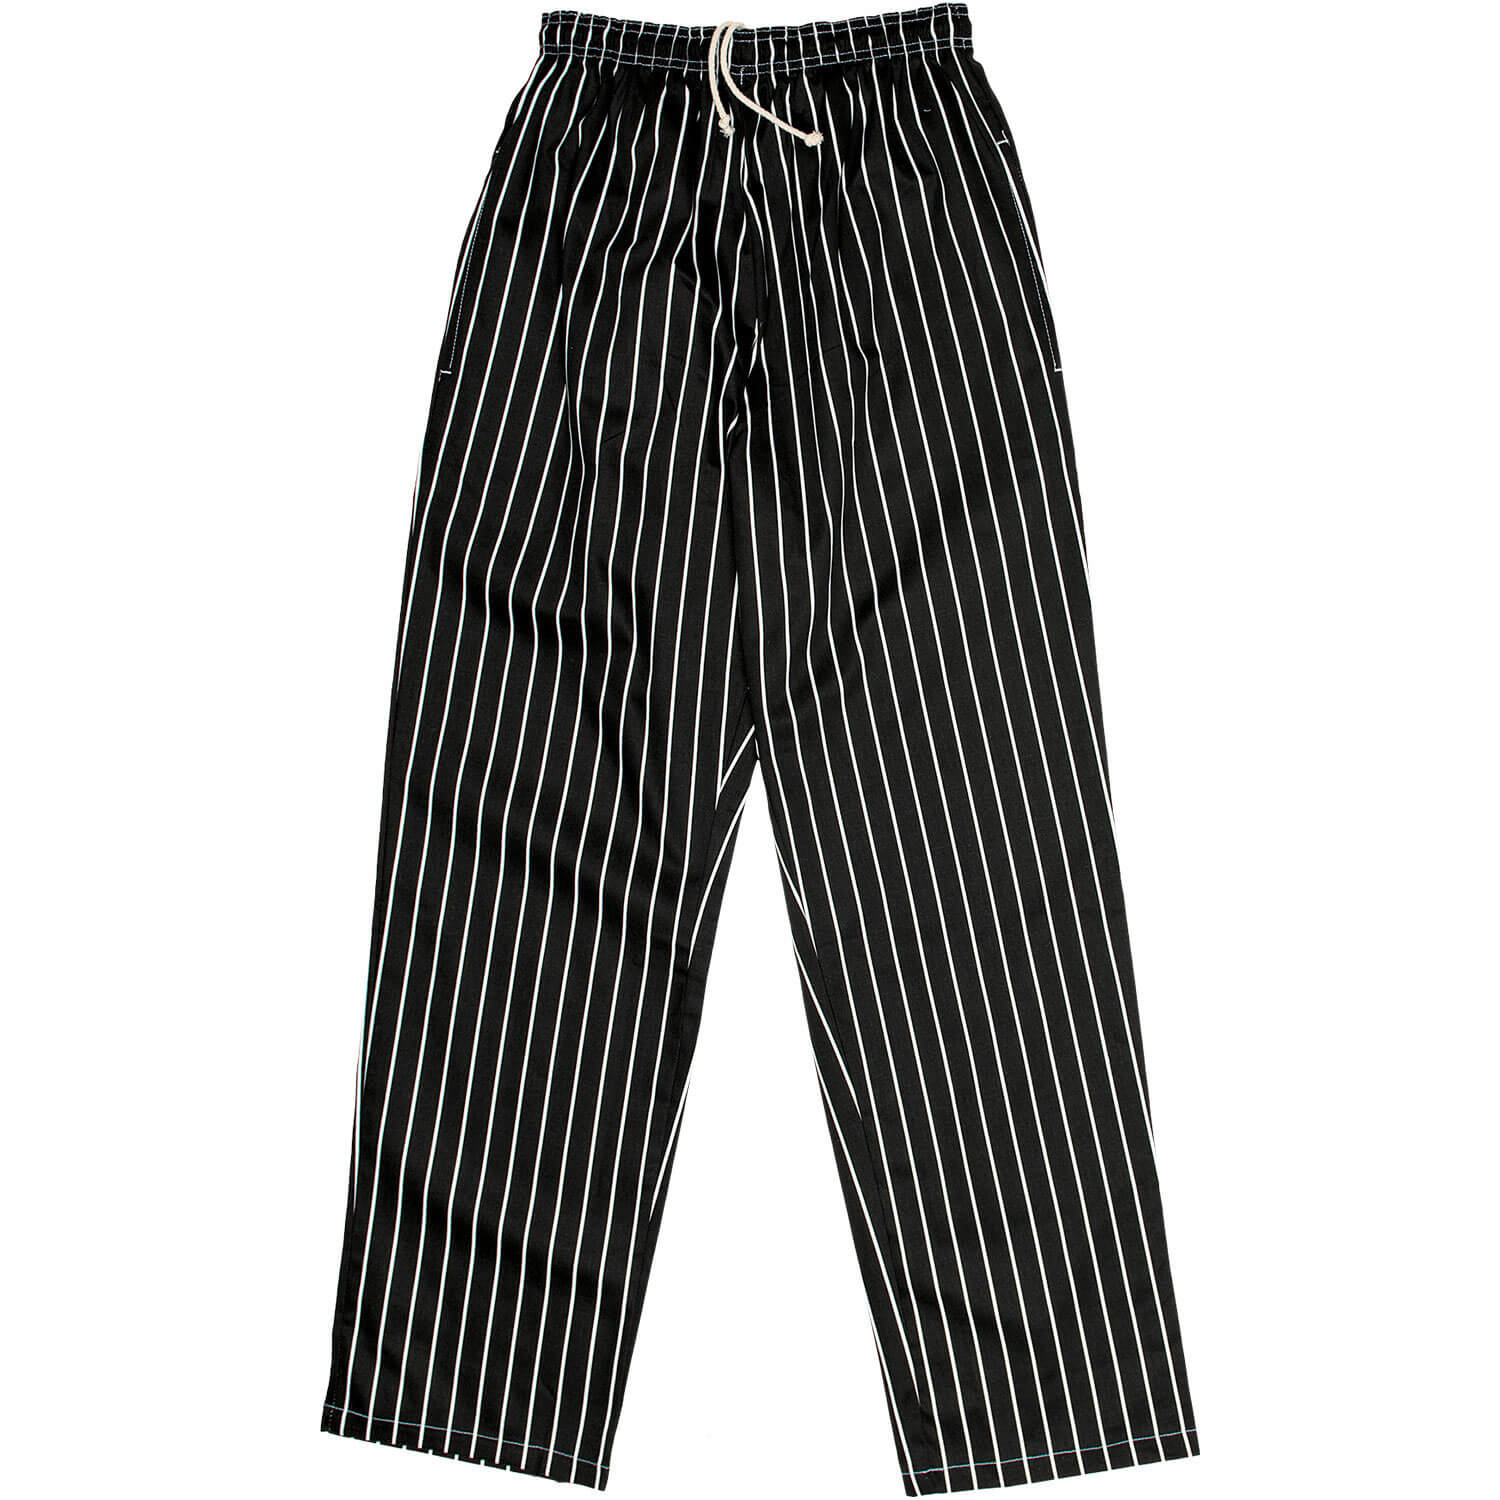 Stylish Javlin Printed Baggy Chef Pants: Comfortable And Trendy ...